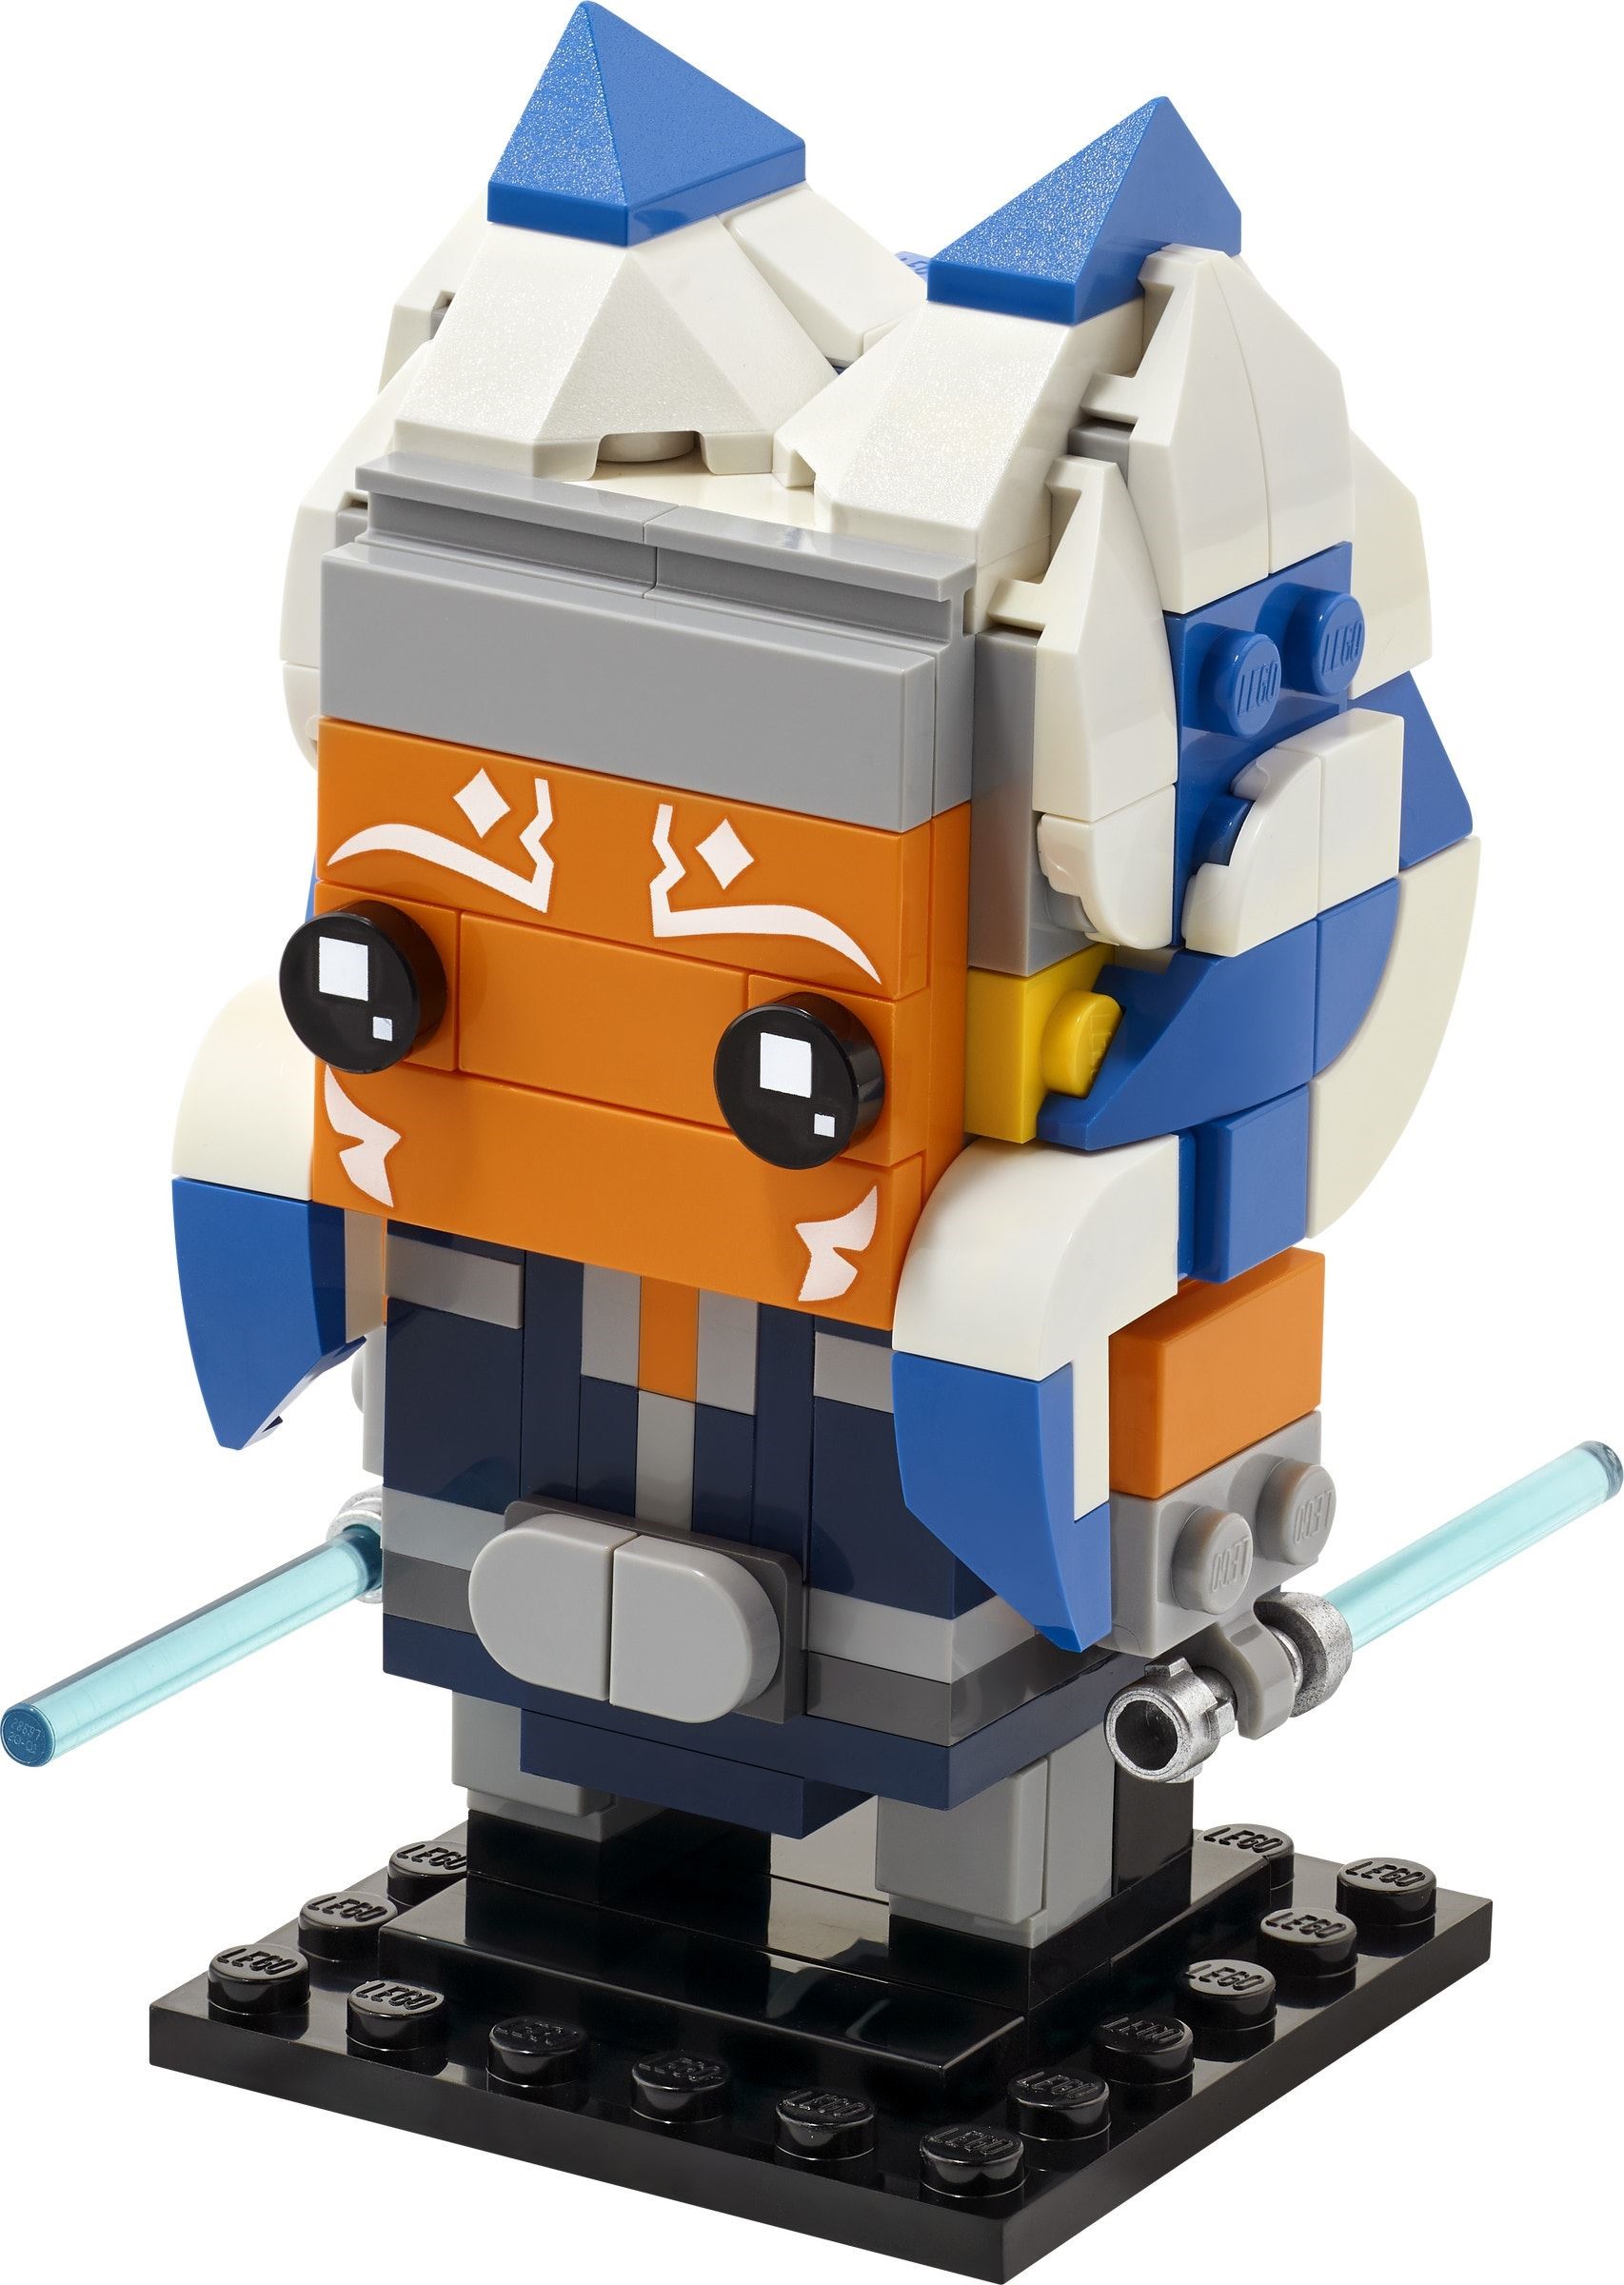 LEGO BrickHeadz Star Wars